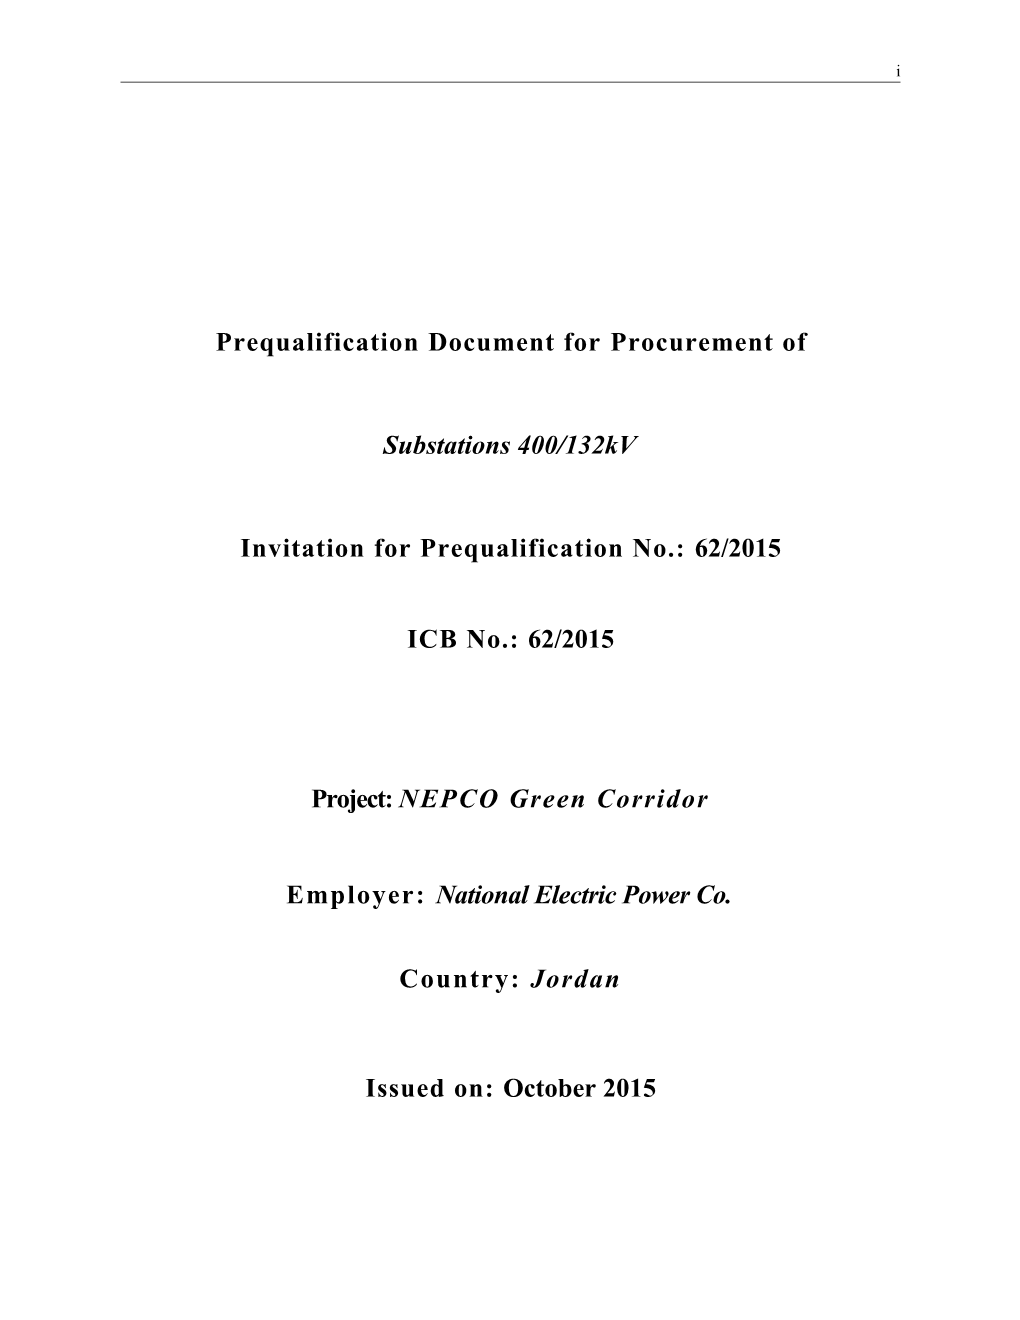 Prequalification Document Forprocurement Of